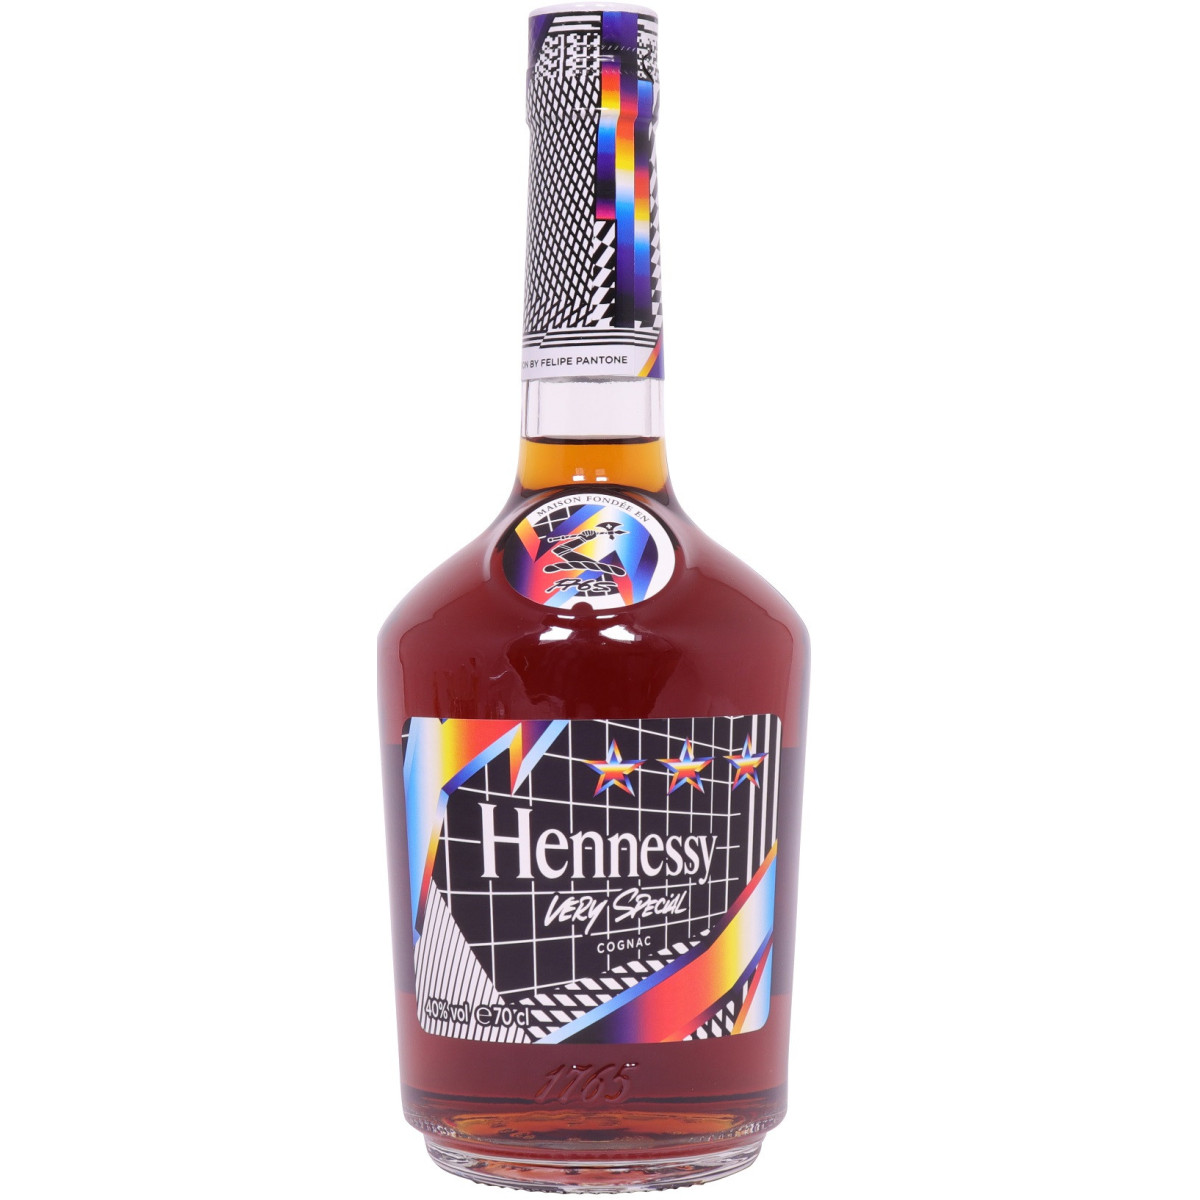 Cognac Edition Hennessy Pantone Felipe VS Limited